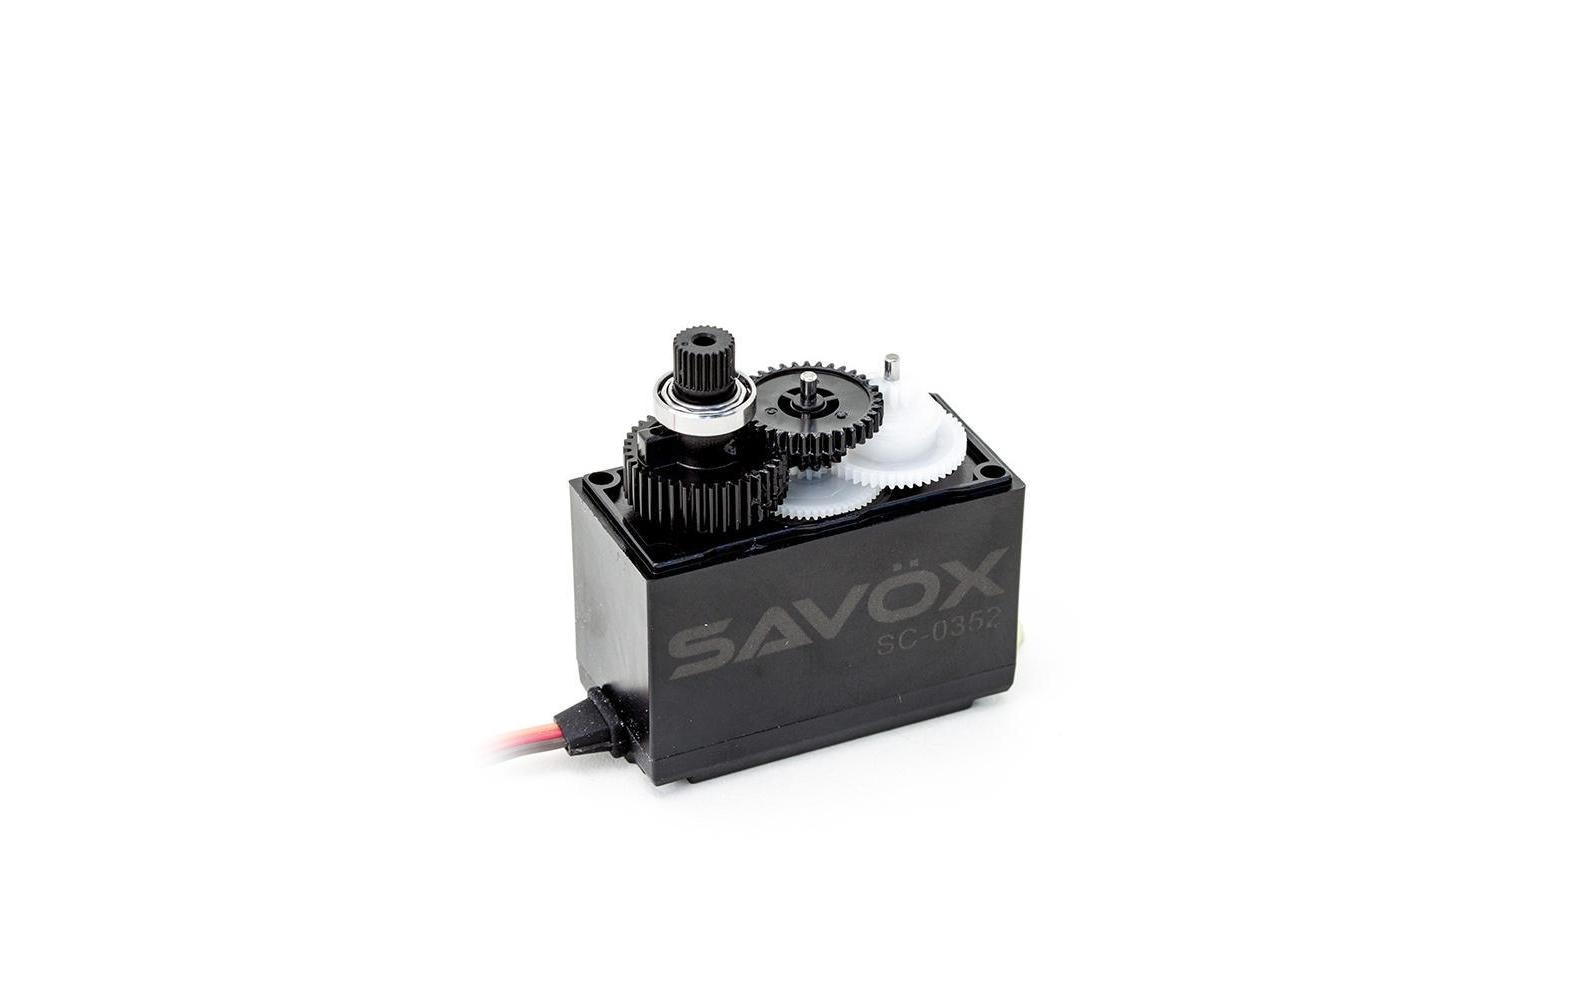 Savöx Standard Servo SC-0352 6.5 kg, 0.13 s, Digital